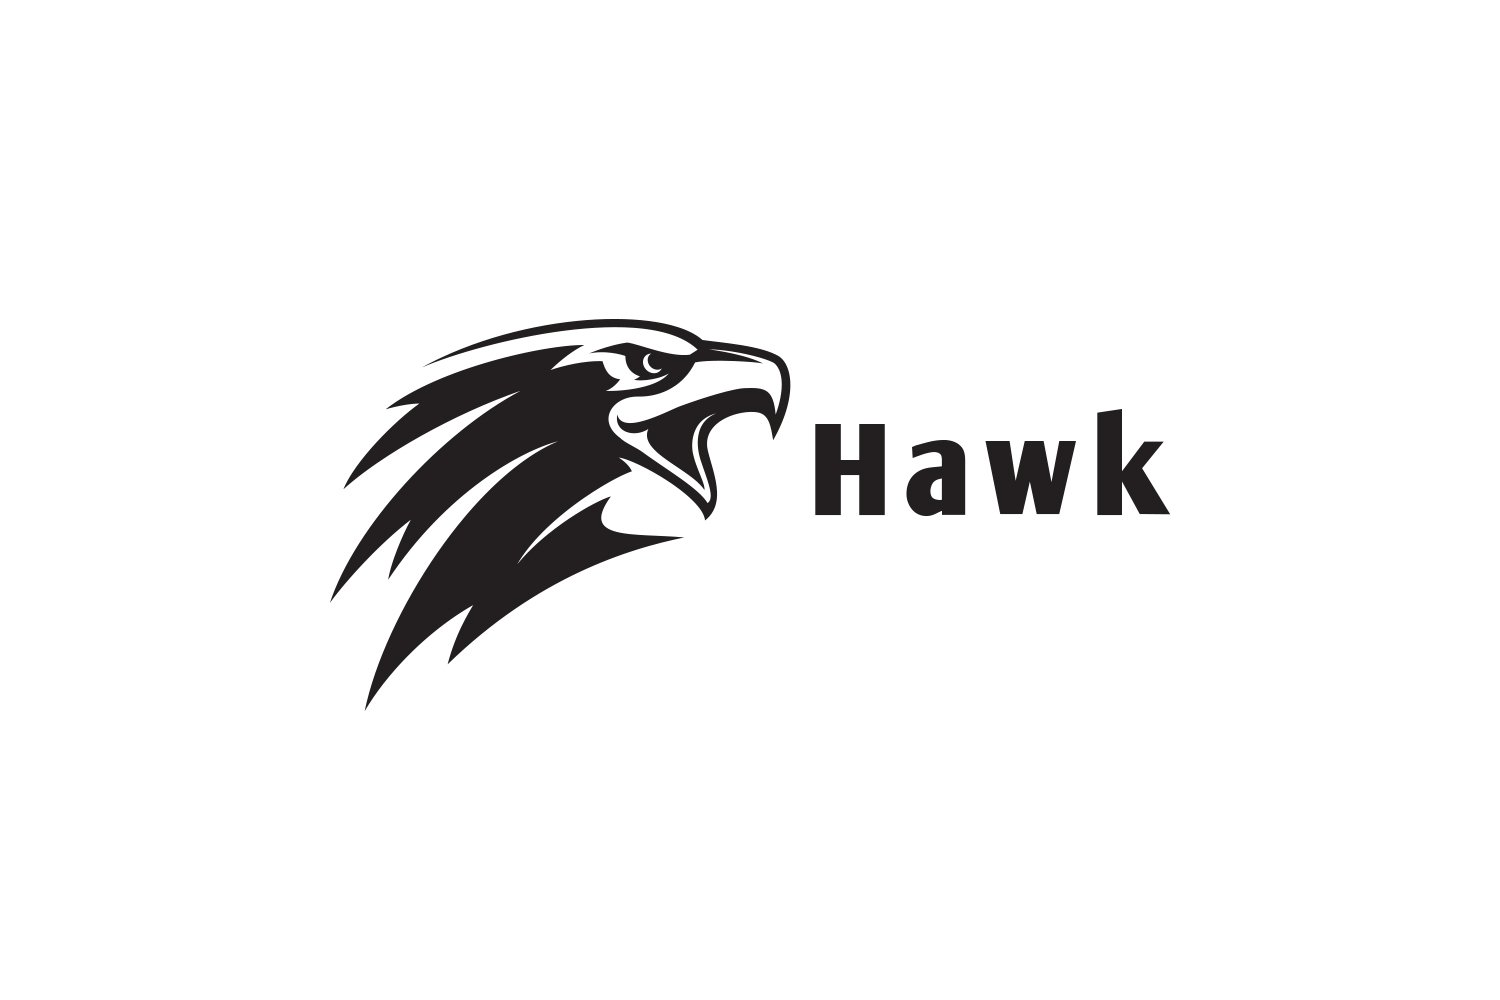 Hawk Logo Design cover image.